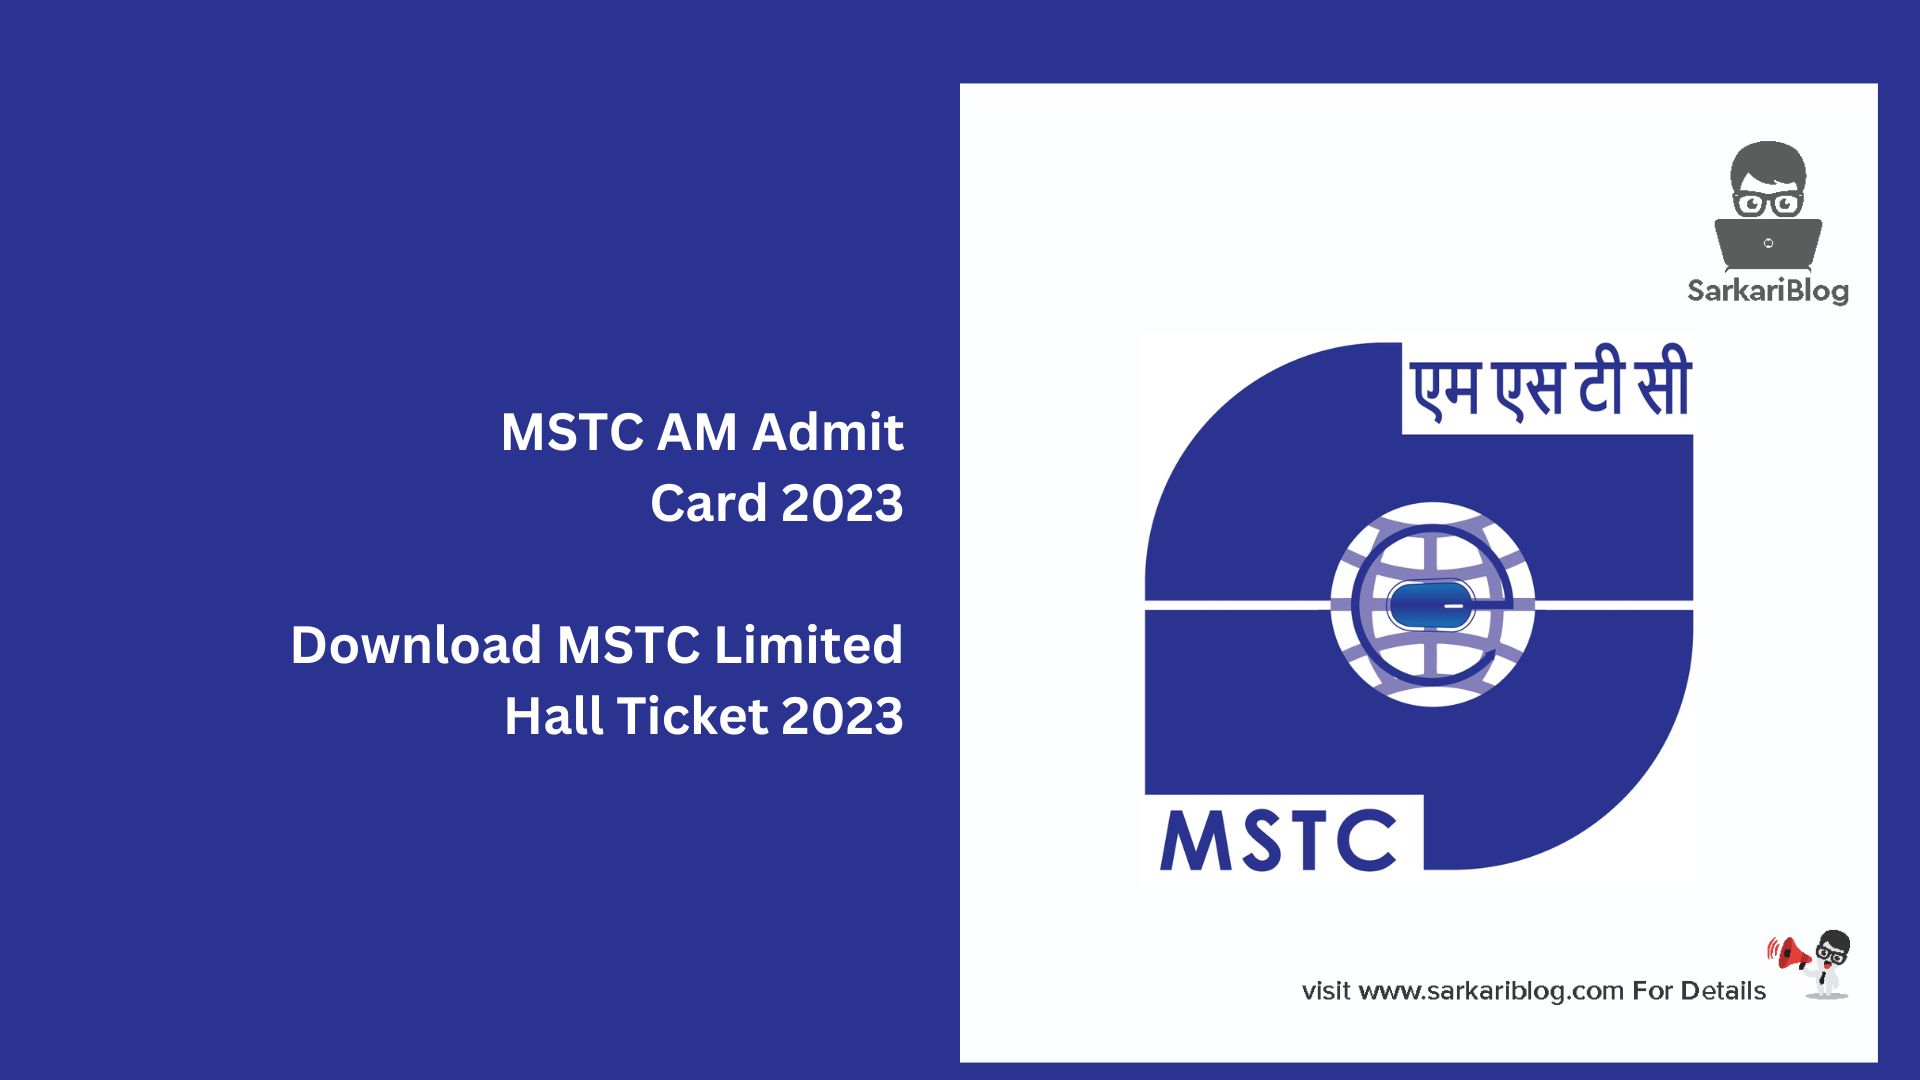 MSTC AM Admit Card 2023